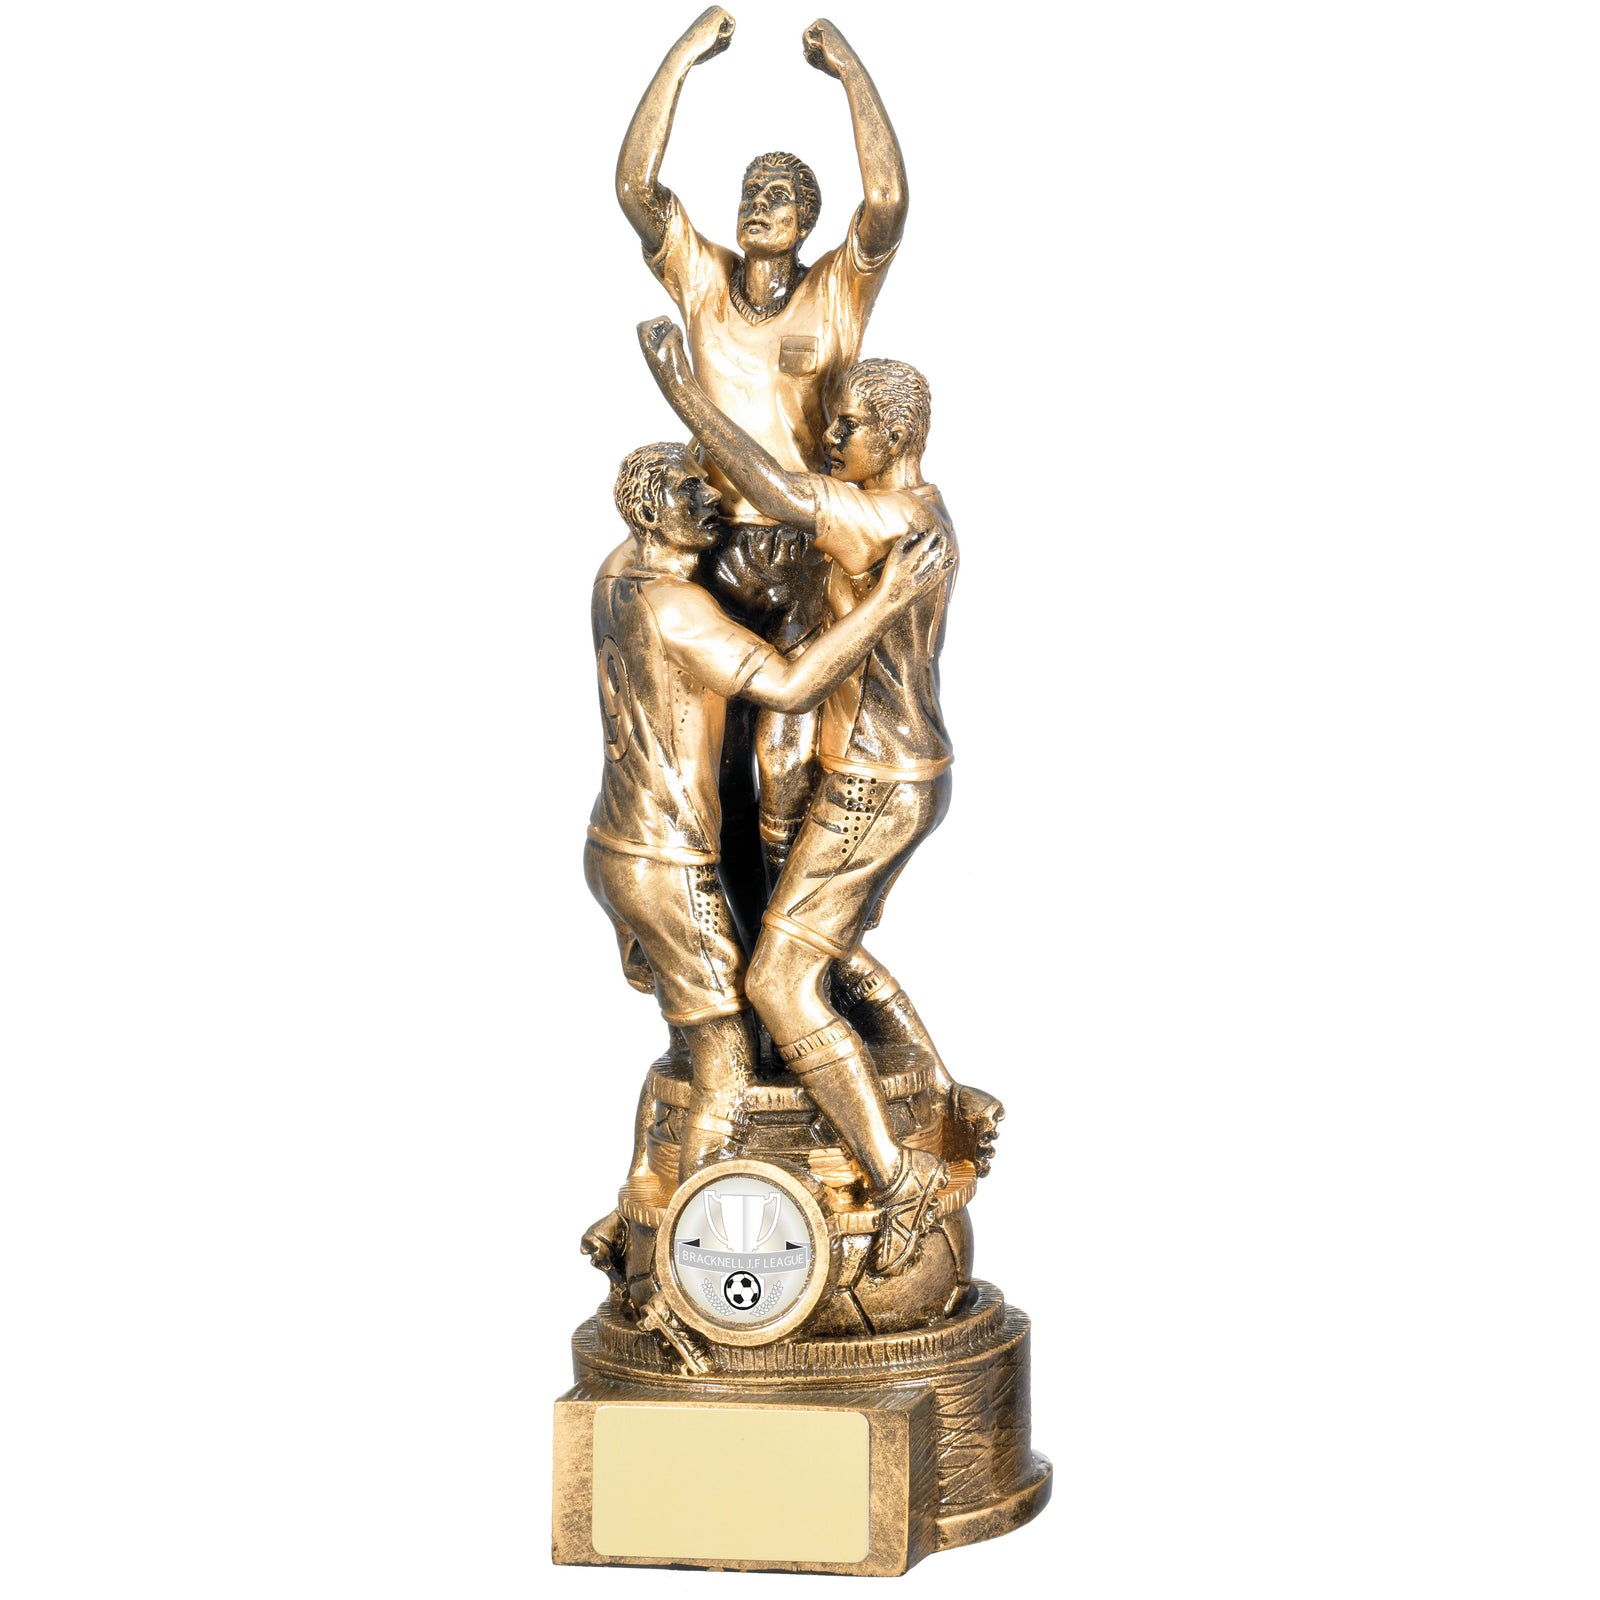 Triumph Male Football Celebration Figurine Award